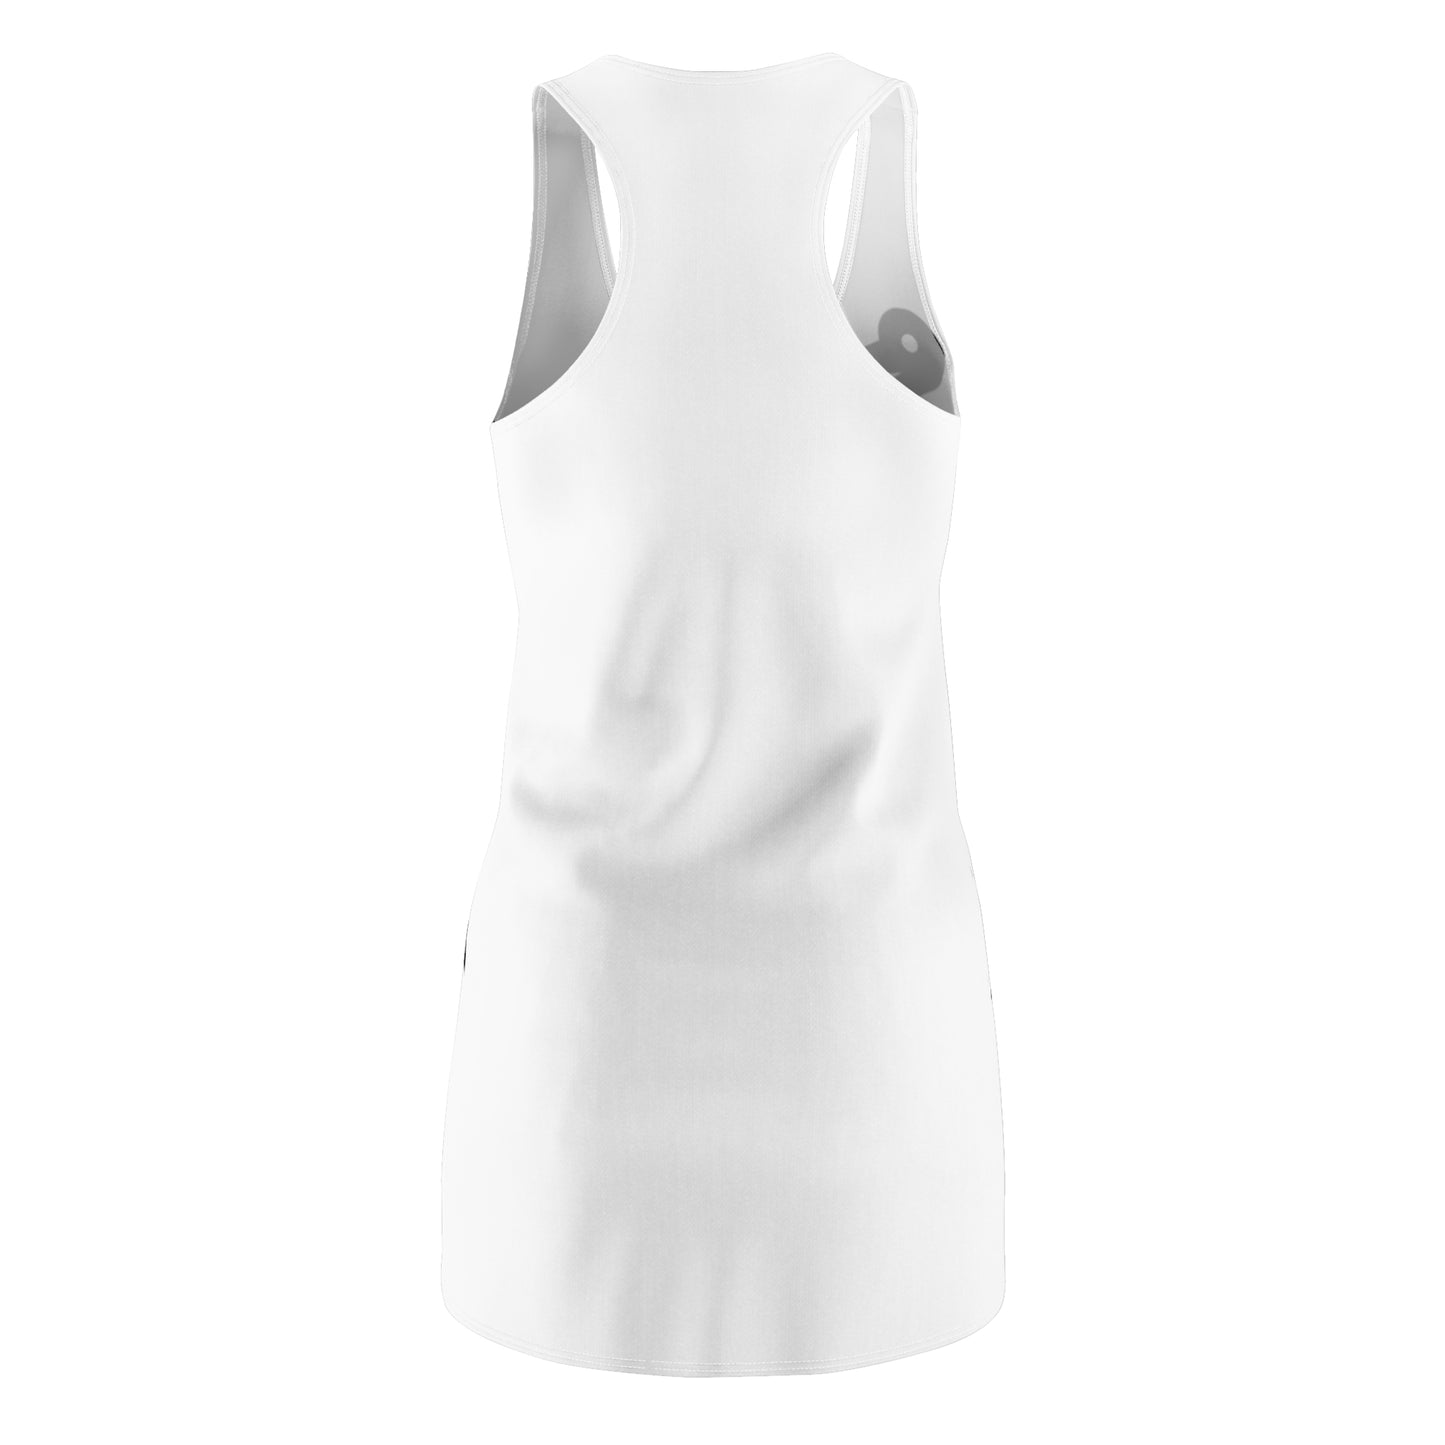 GRUMONH Women's Cut & Sew Racerback Dress White